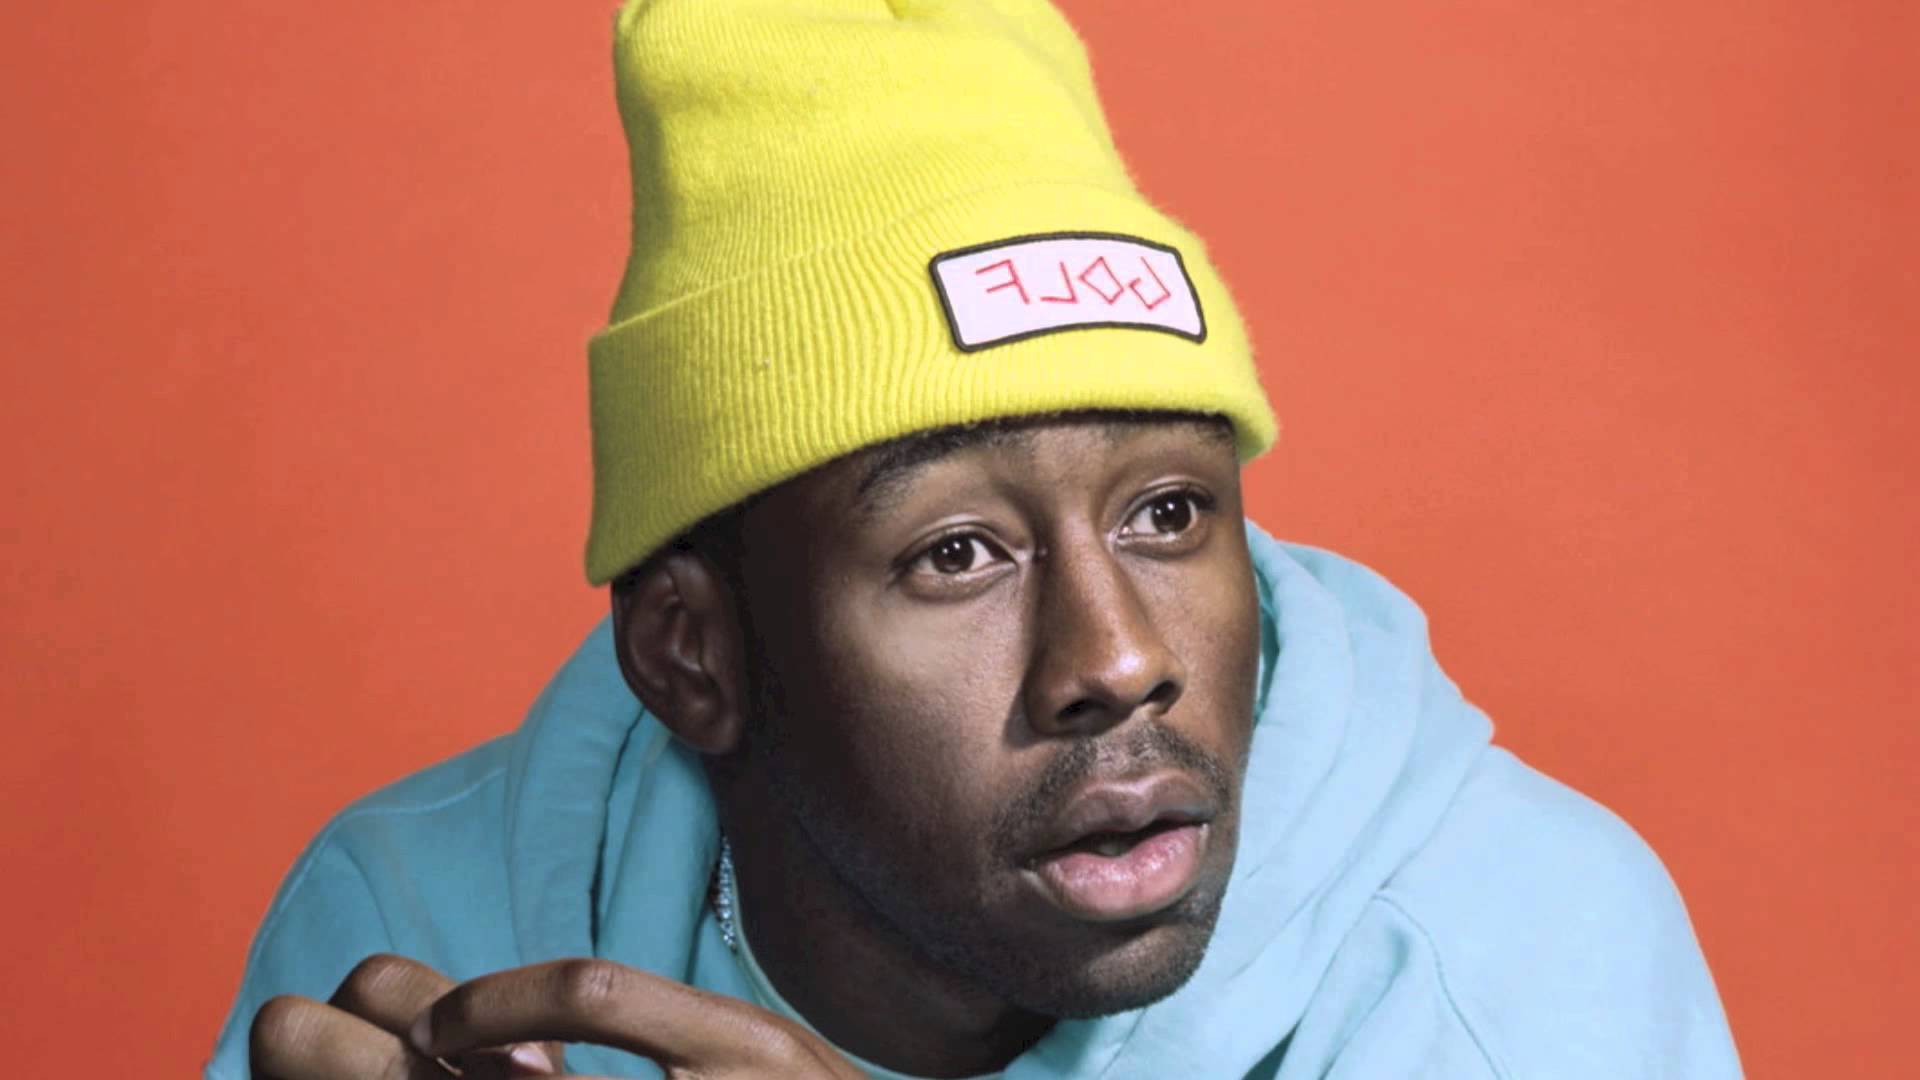 Nova música do Rapper Tyler, The Creator sugere sexualidade